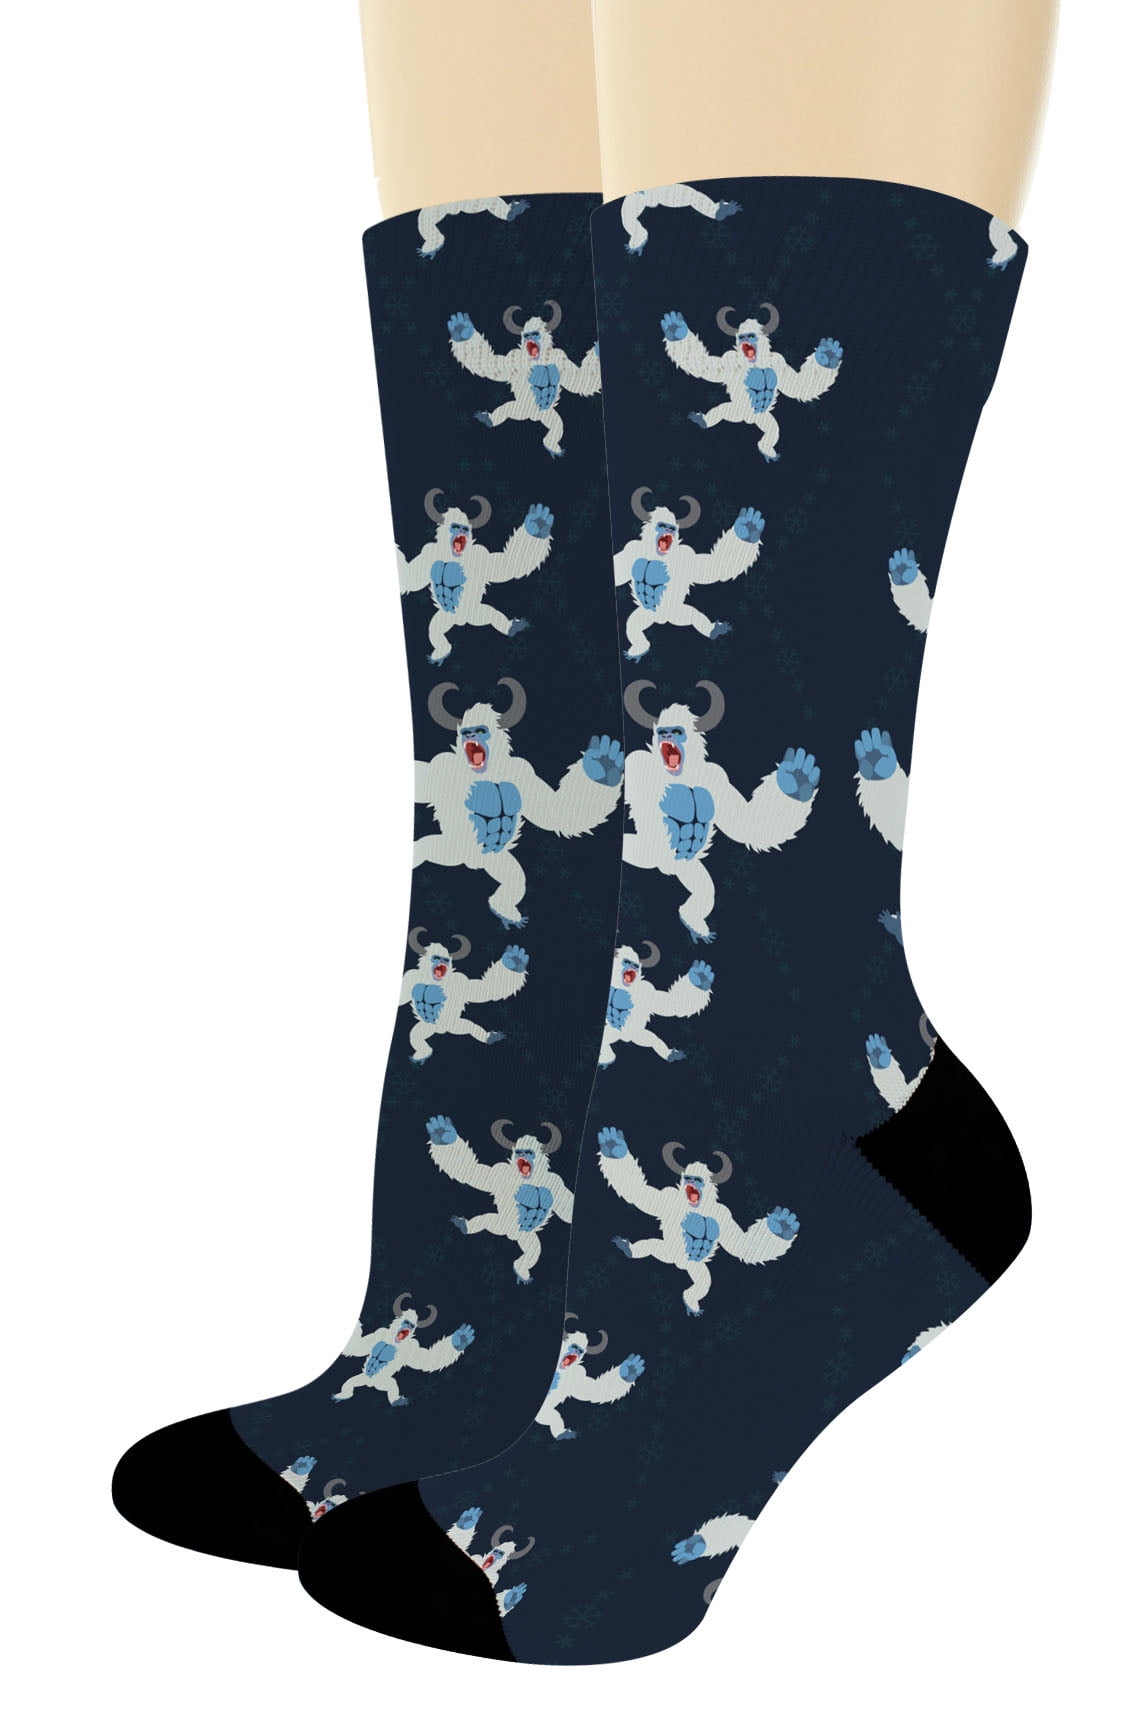 ThisWear Yeti Accessories Sock Yeti Bigfoot Sock Animal Print Socks  Folklore Gifts 1-Pair Novelty Crew Socks 